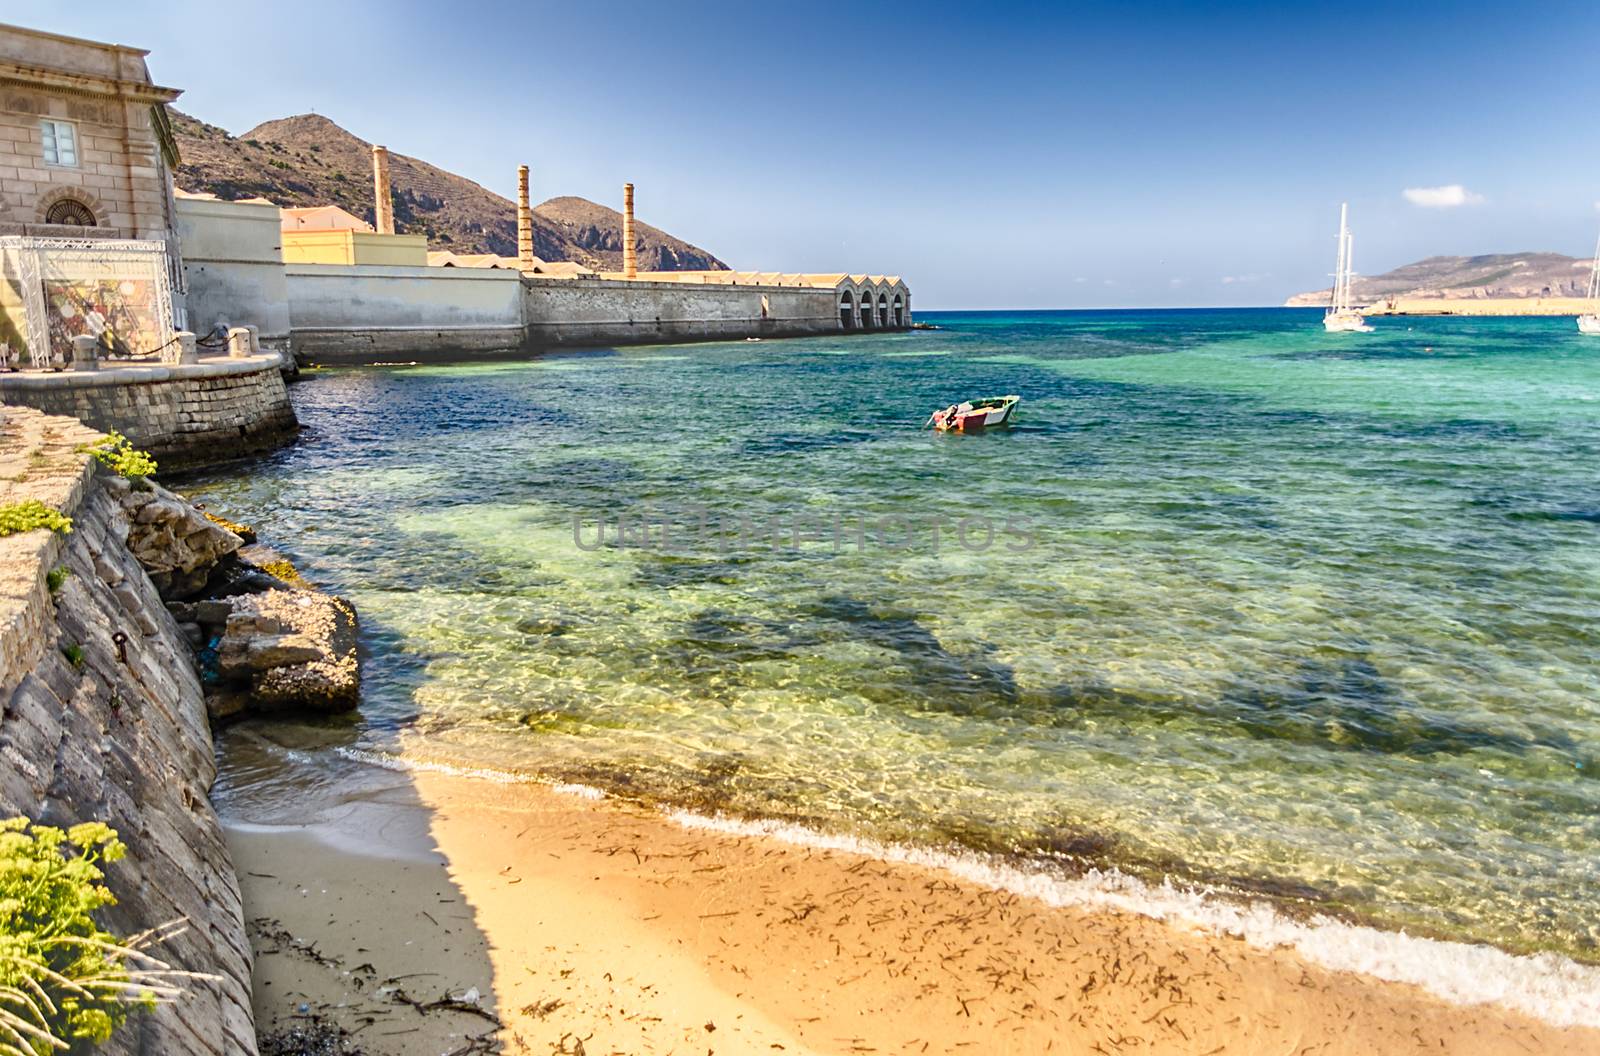 Island of Favignana, Aegadian Islands, Sicily, Summer 2014